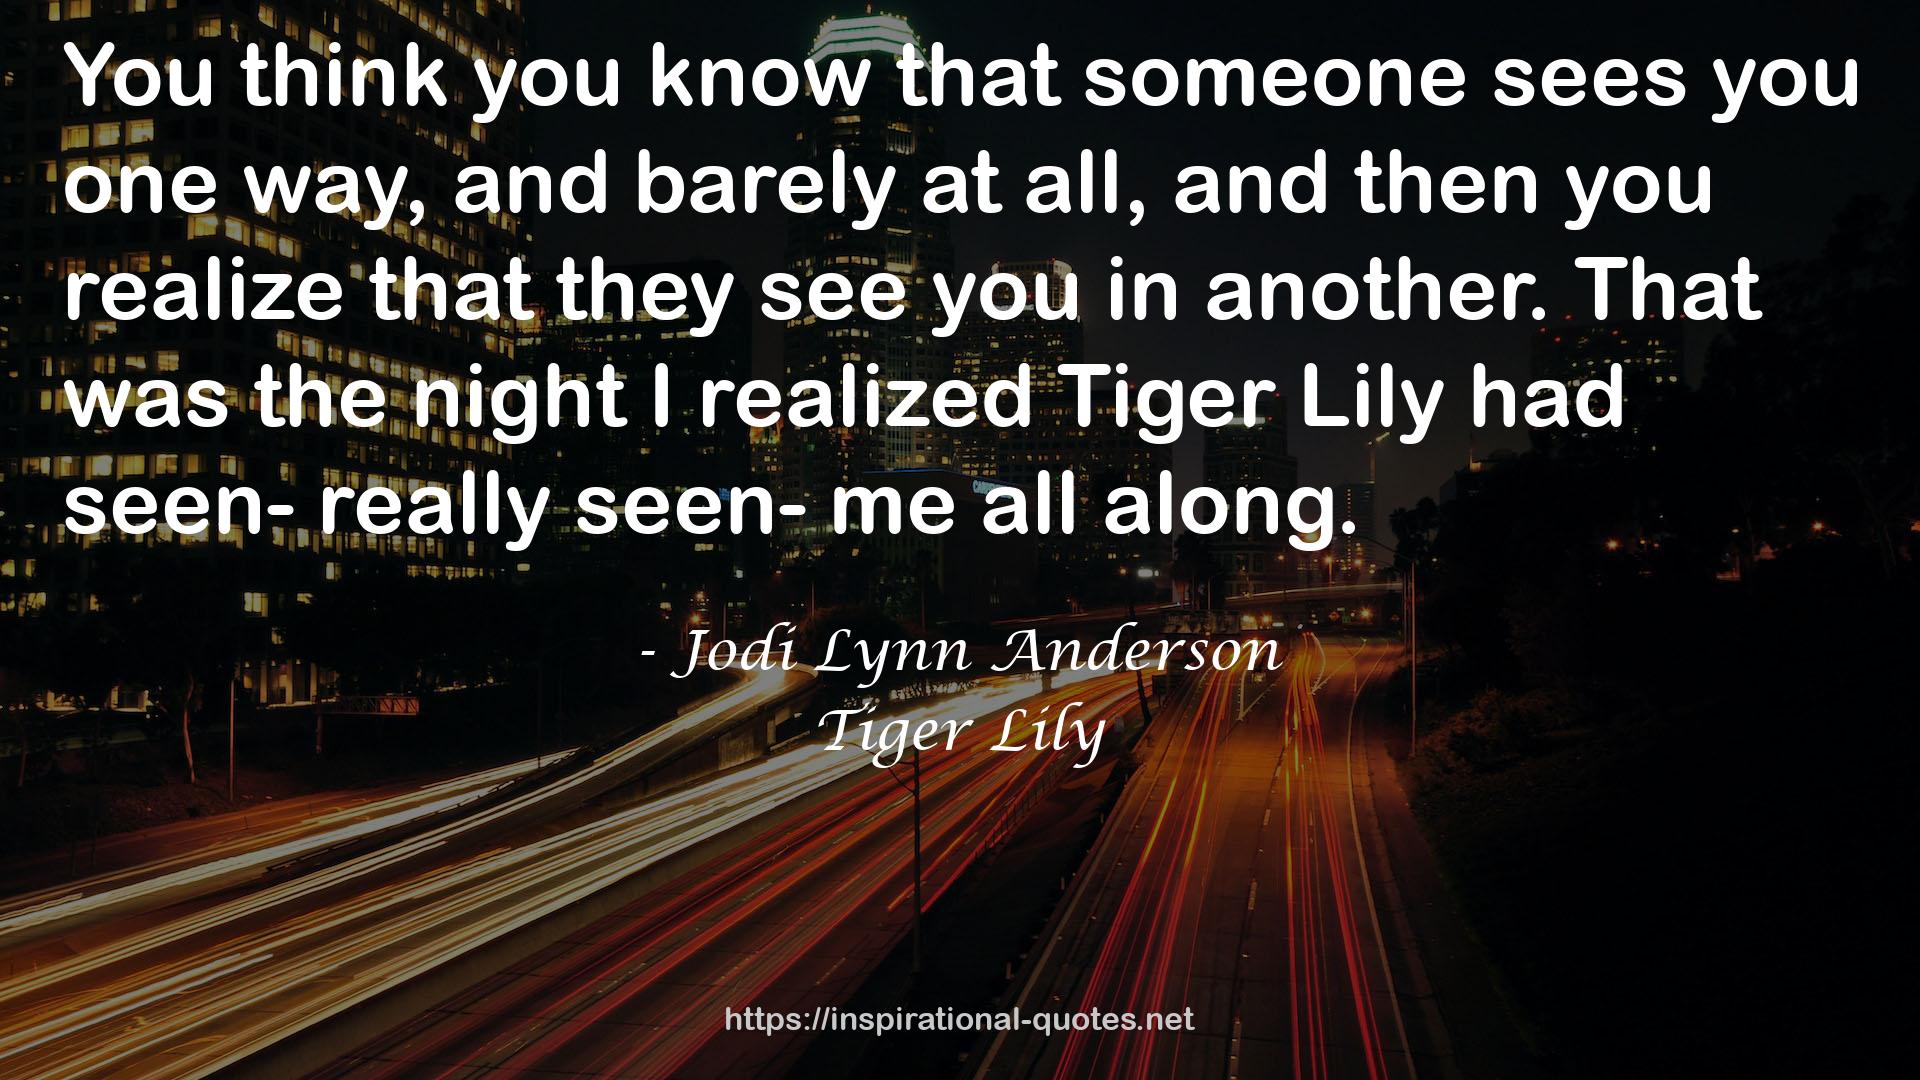 Jodi Lynn Anderson QUOTES